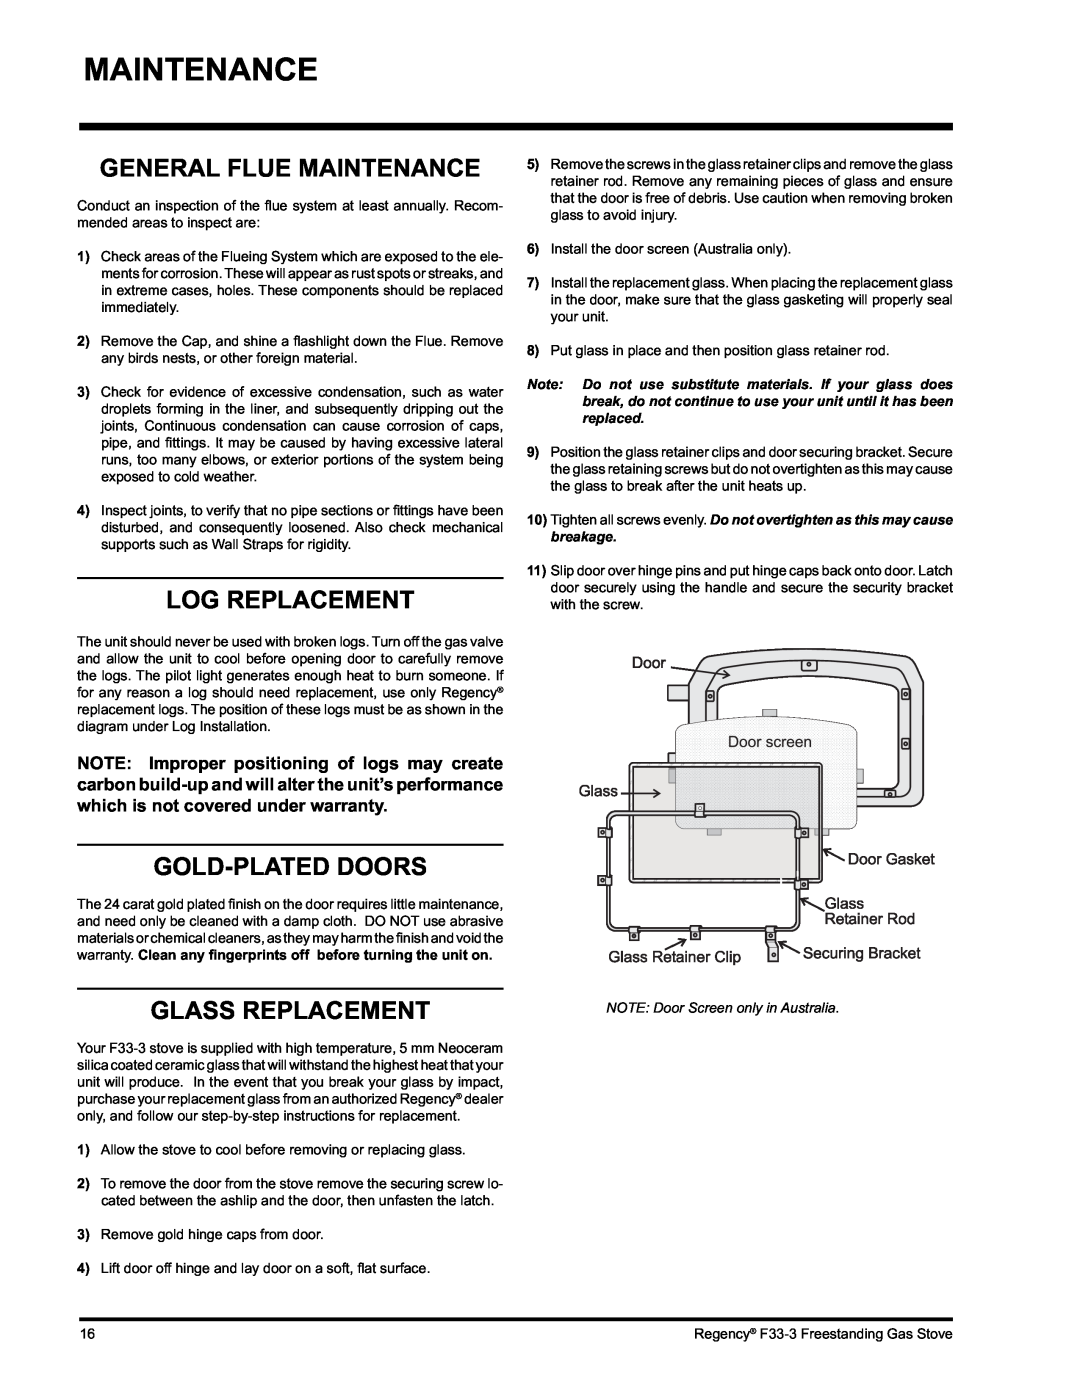 Regency Wraps F33 installation manual General Flue Maintenance, Log Replacement, Gold-Plateddoors, Glass Replacement 